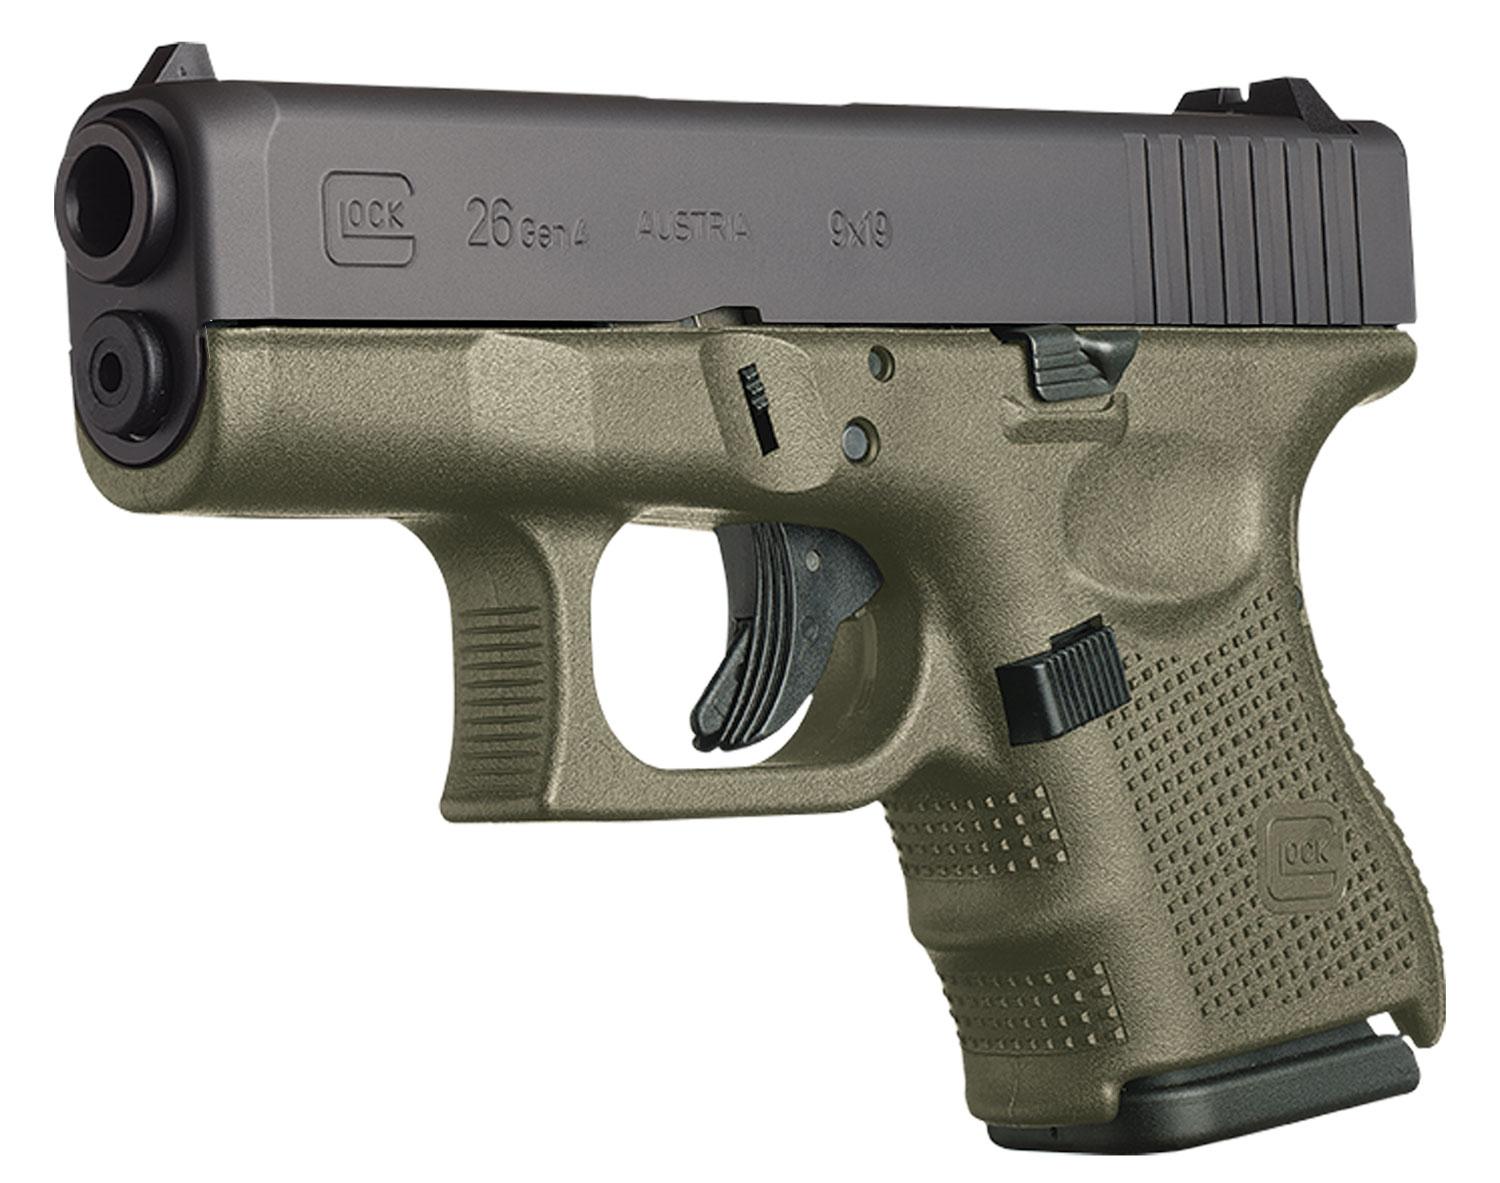 Glock G26 Pistol PI2657201, 9mm Luger, 3.5", OD Green Polymer Grip/Frame, OD Green Finish, 10 Rds